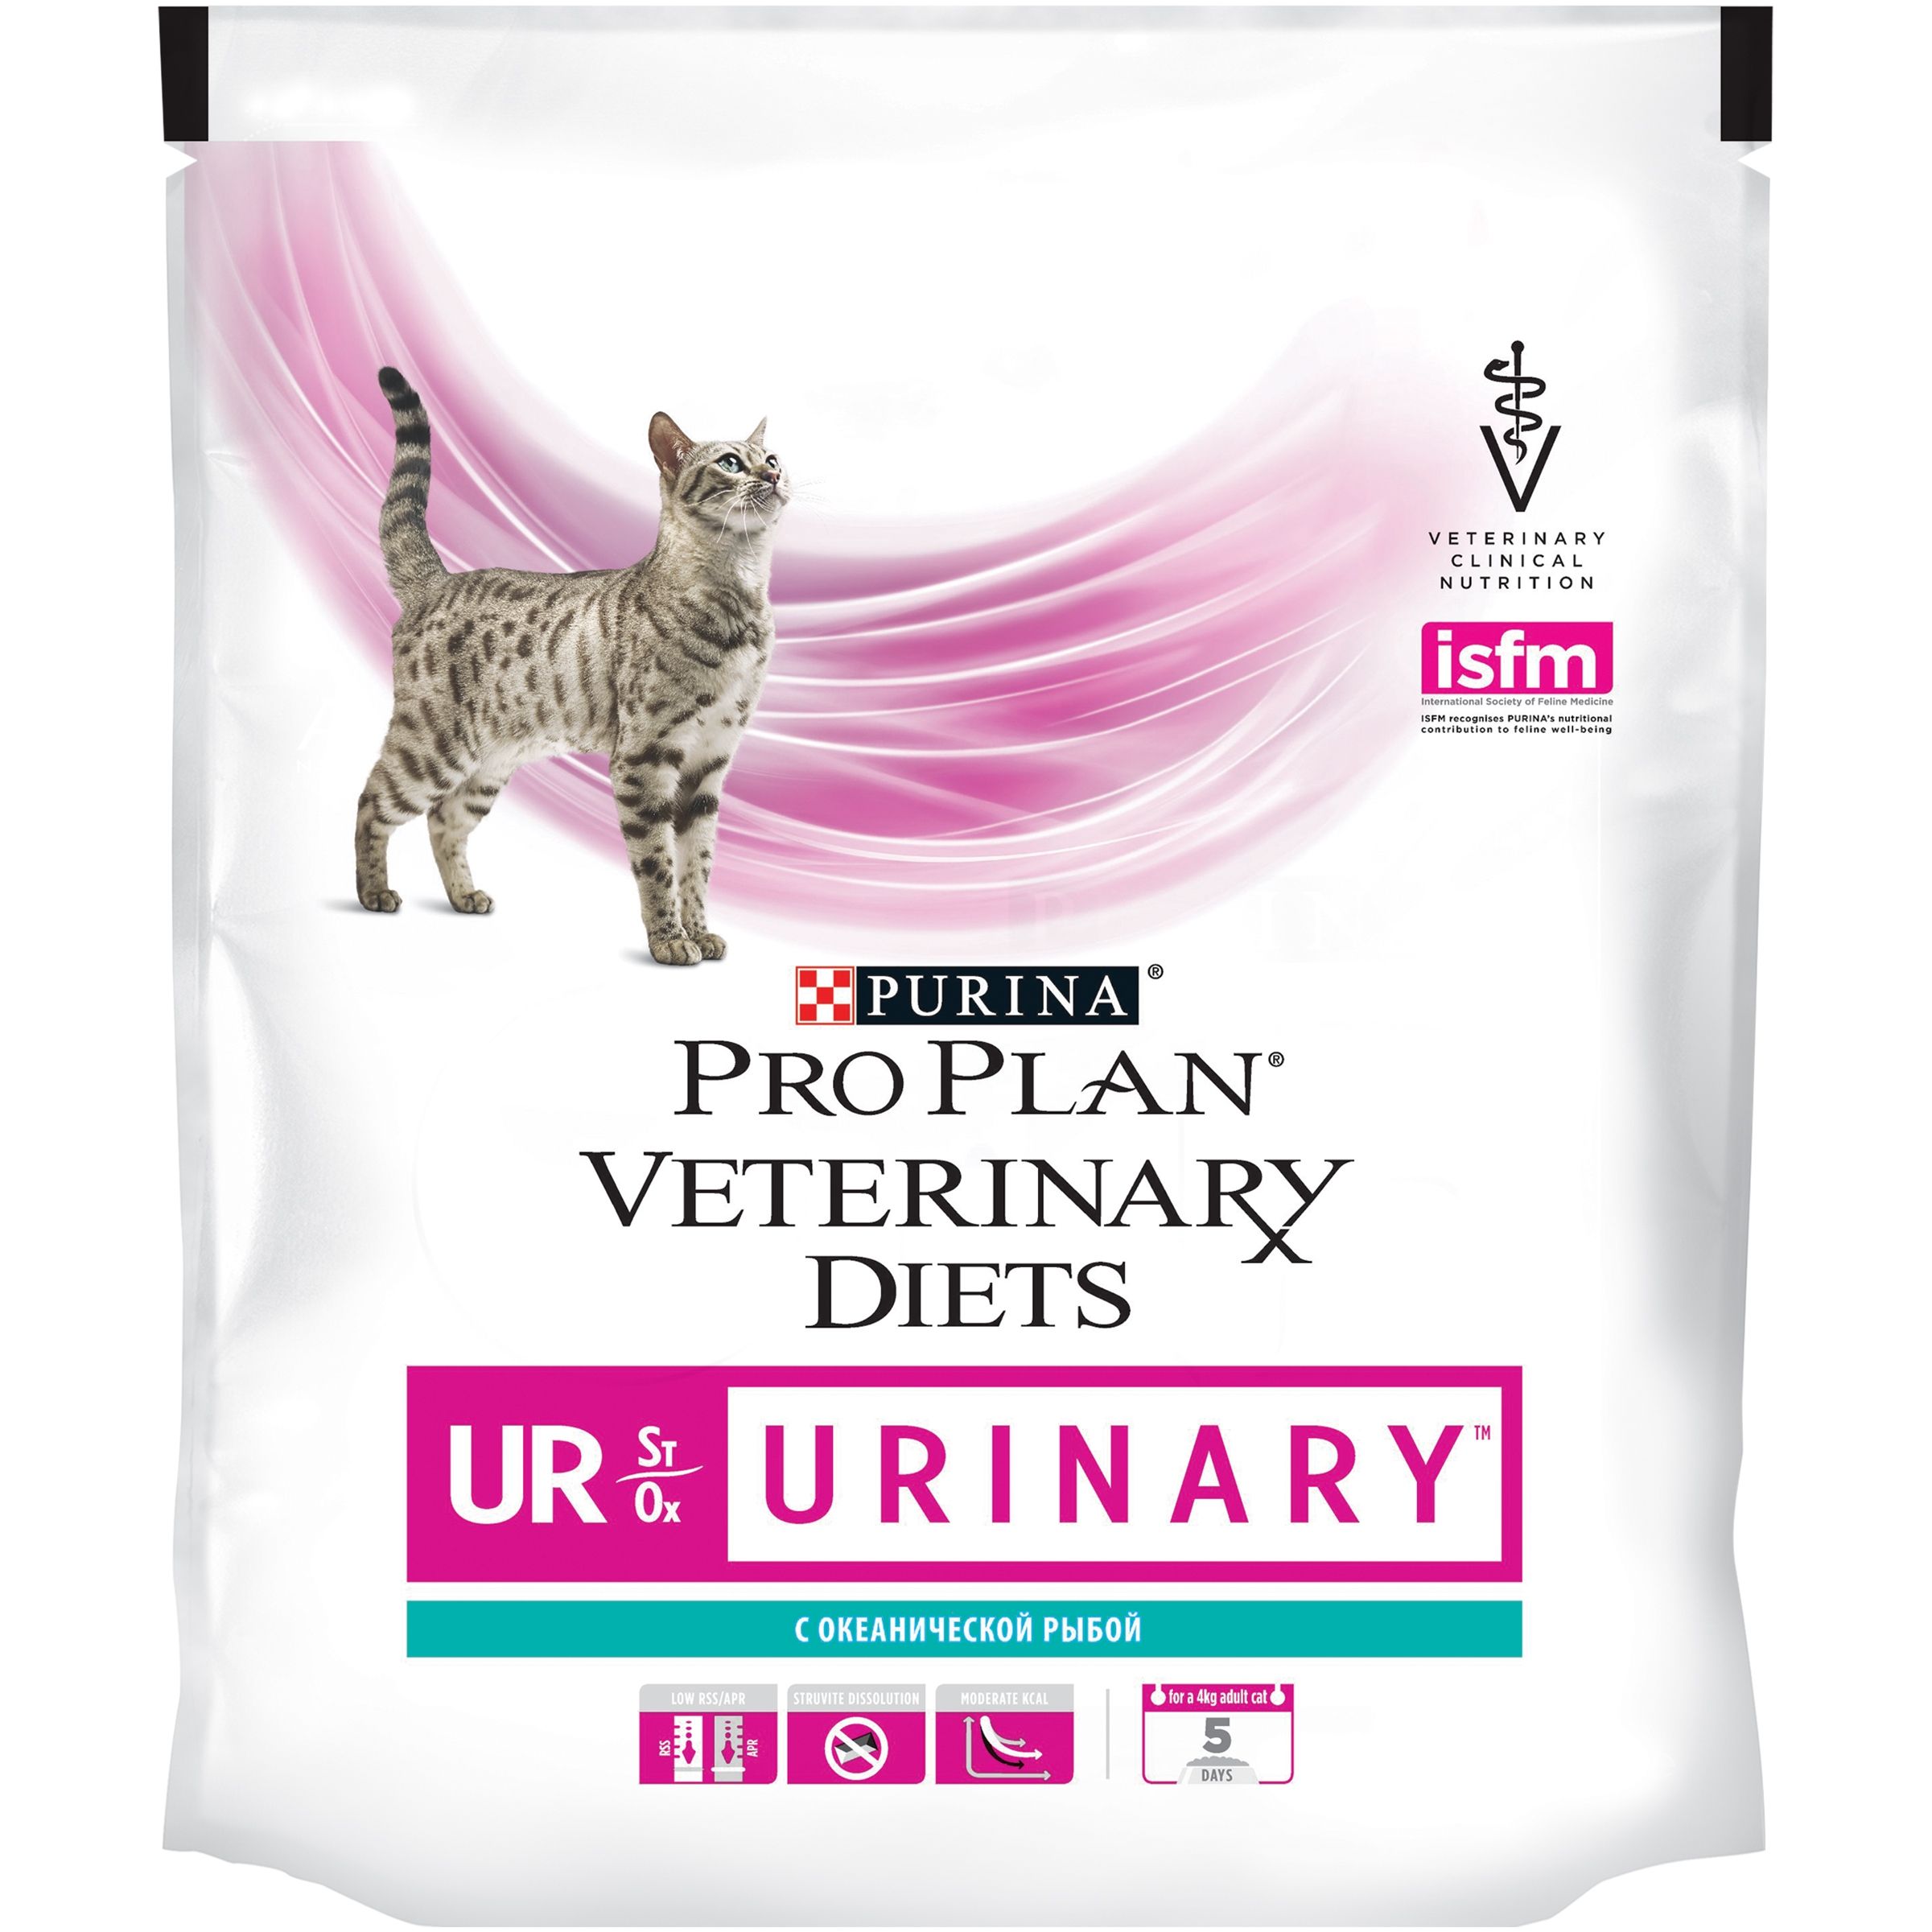 Pro Plan Veterinary Diets UR 